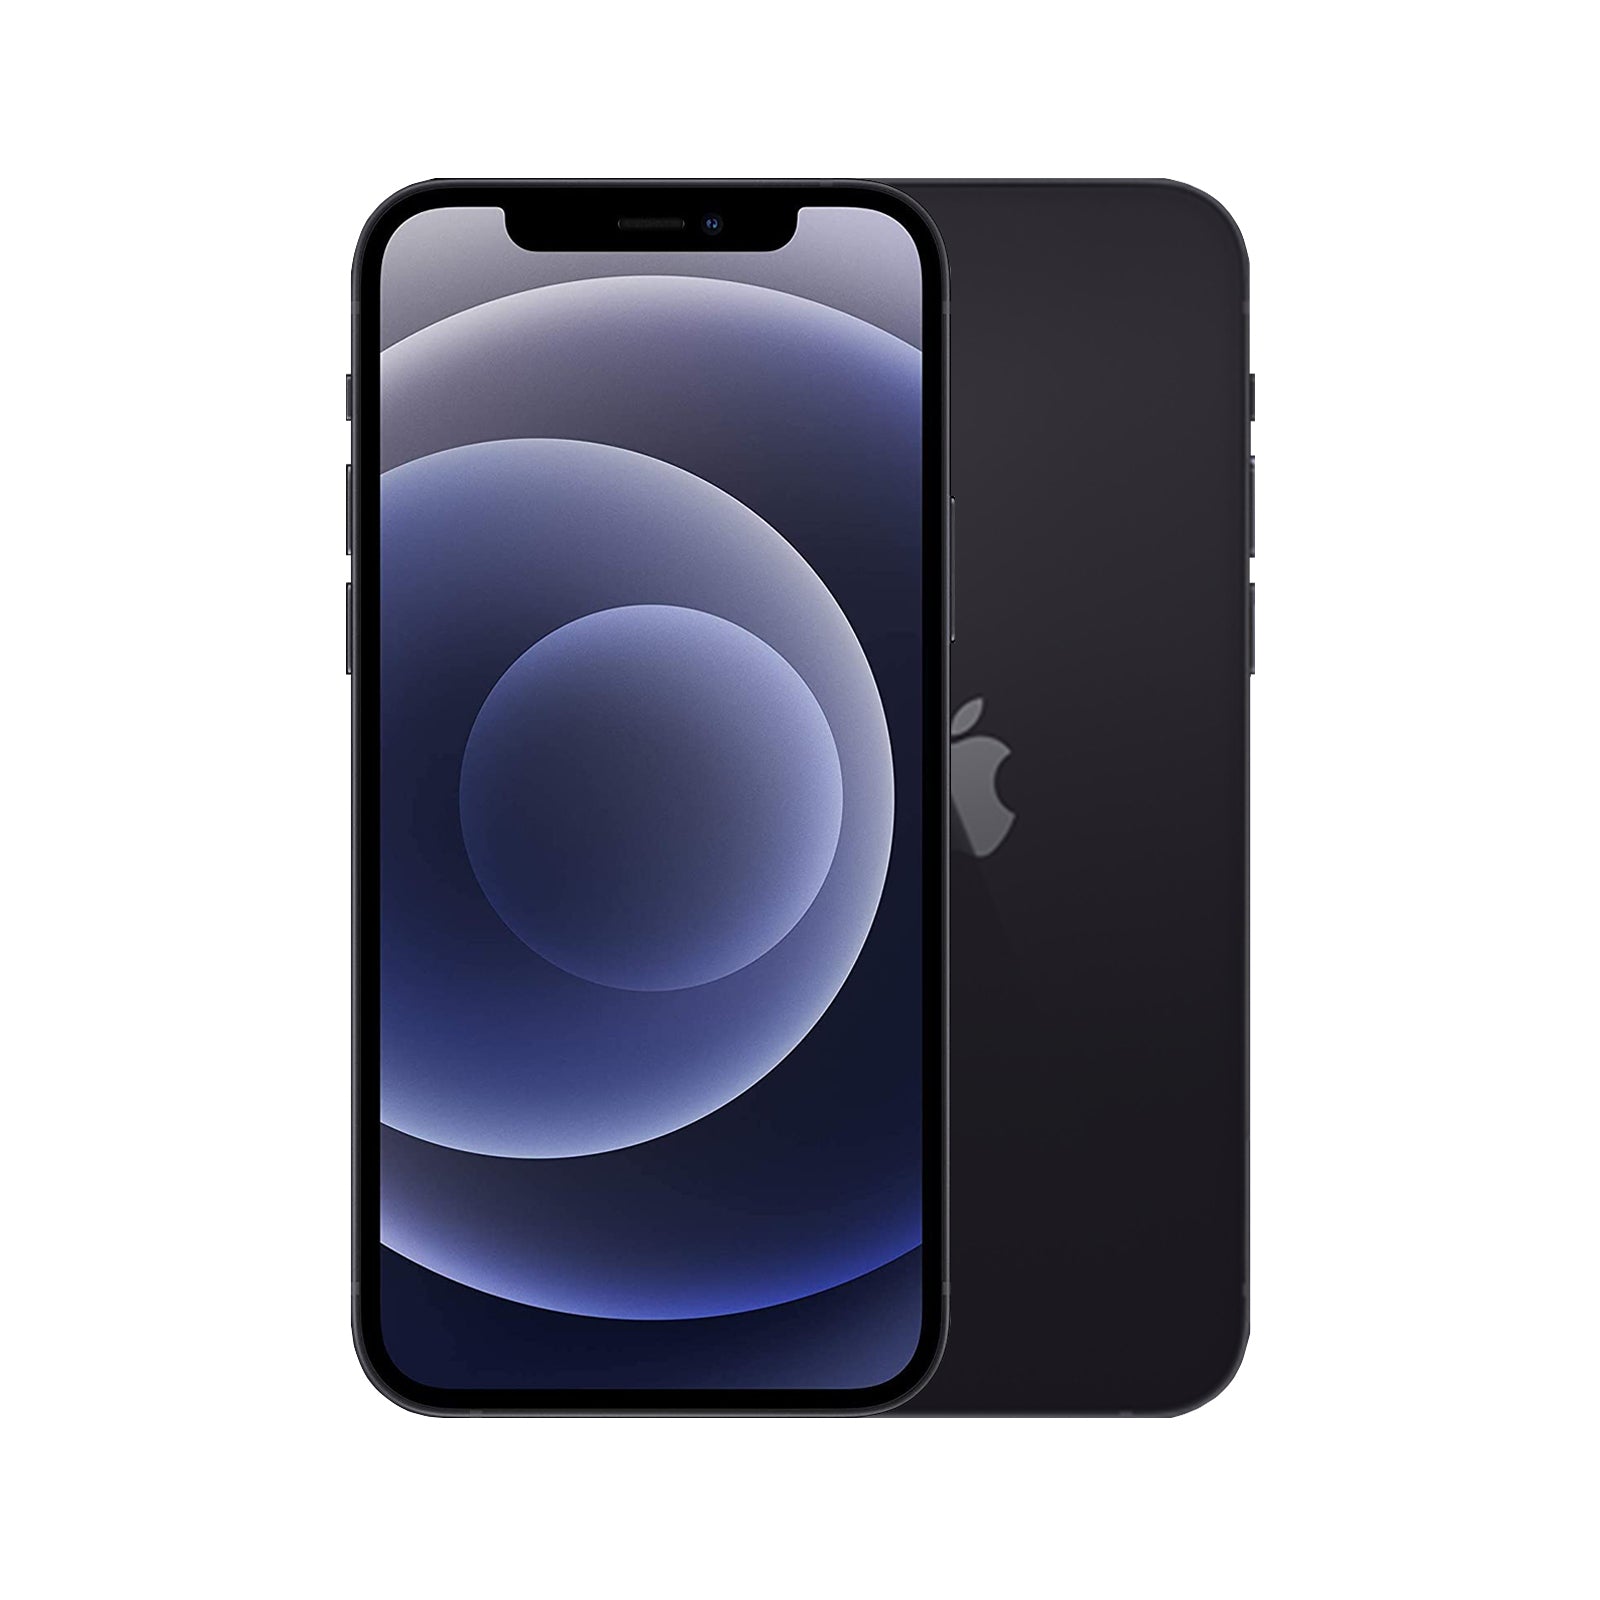 Apple iPhone 12 64GB Black - Excellent - Refurbished